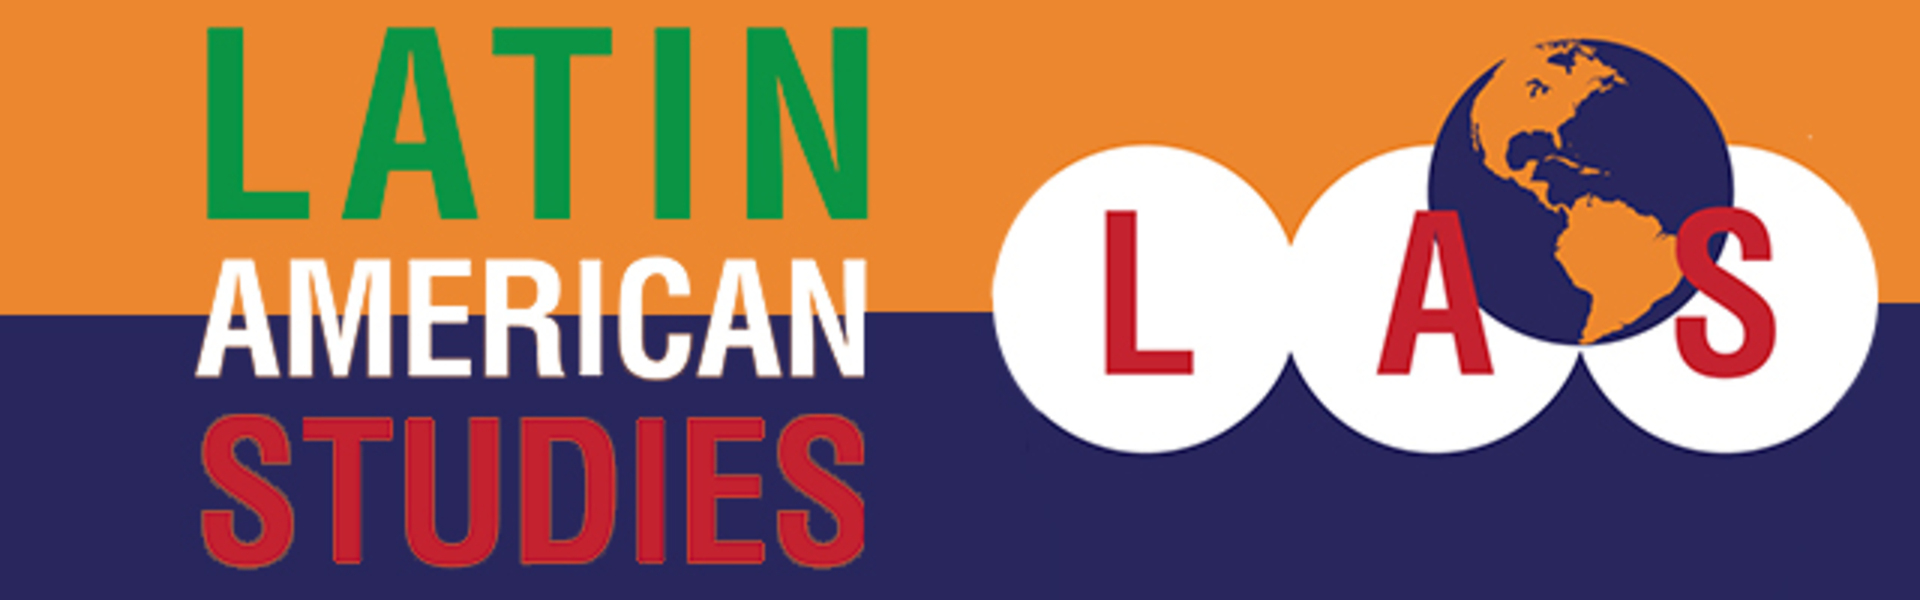 Latin American Studies Banner